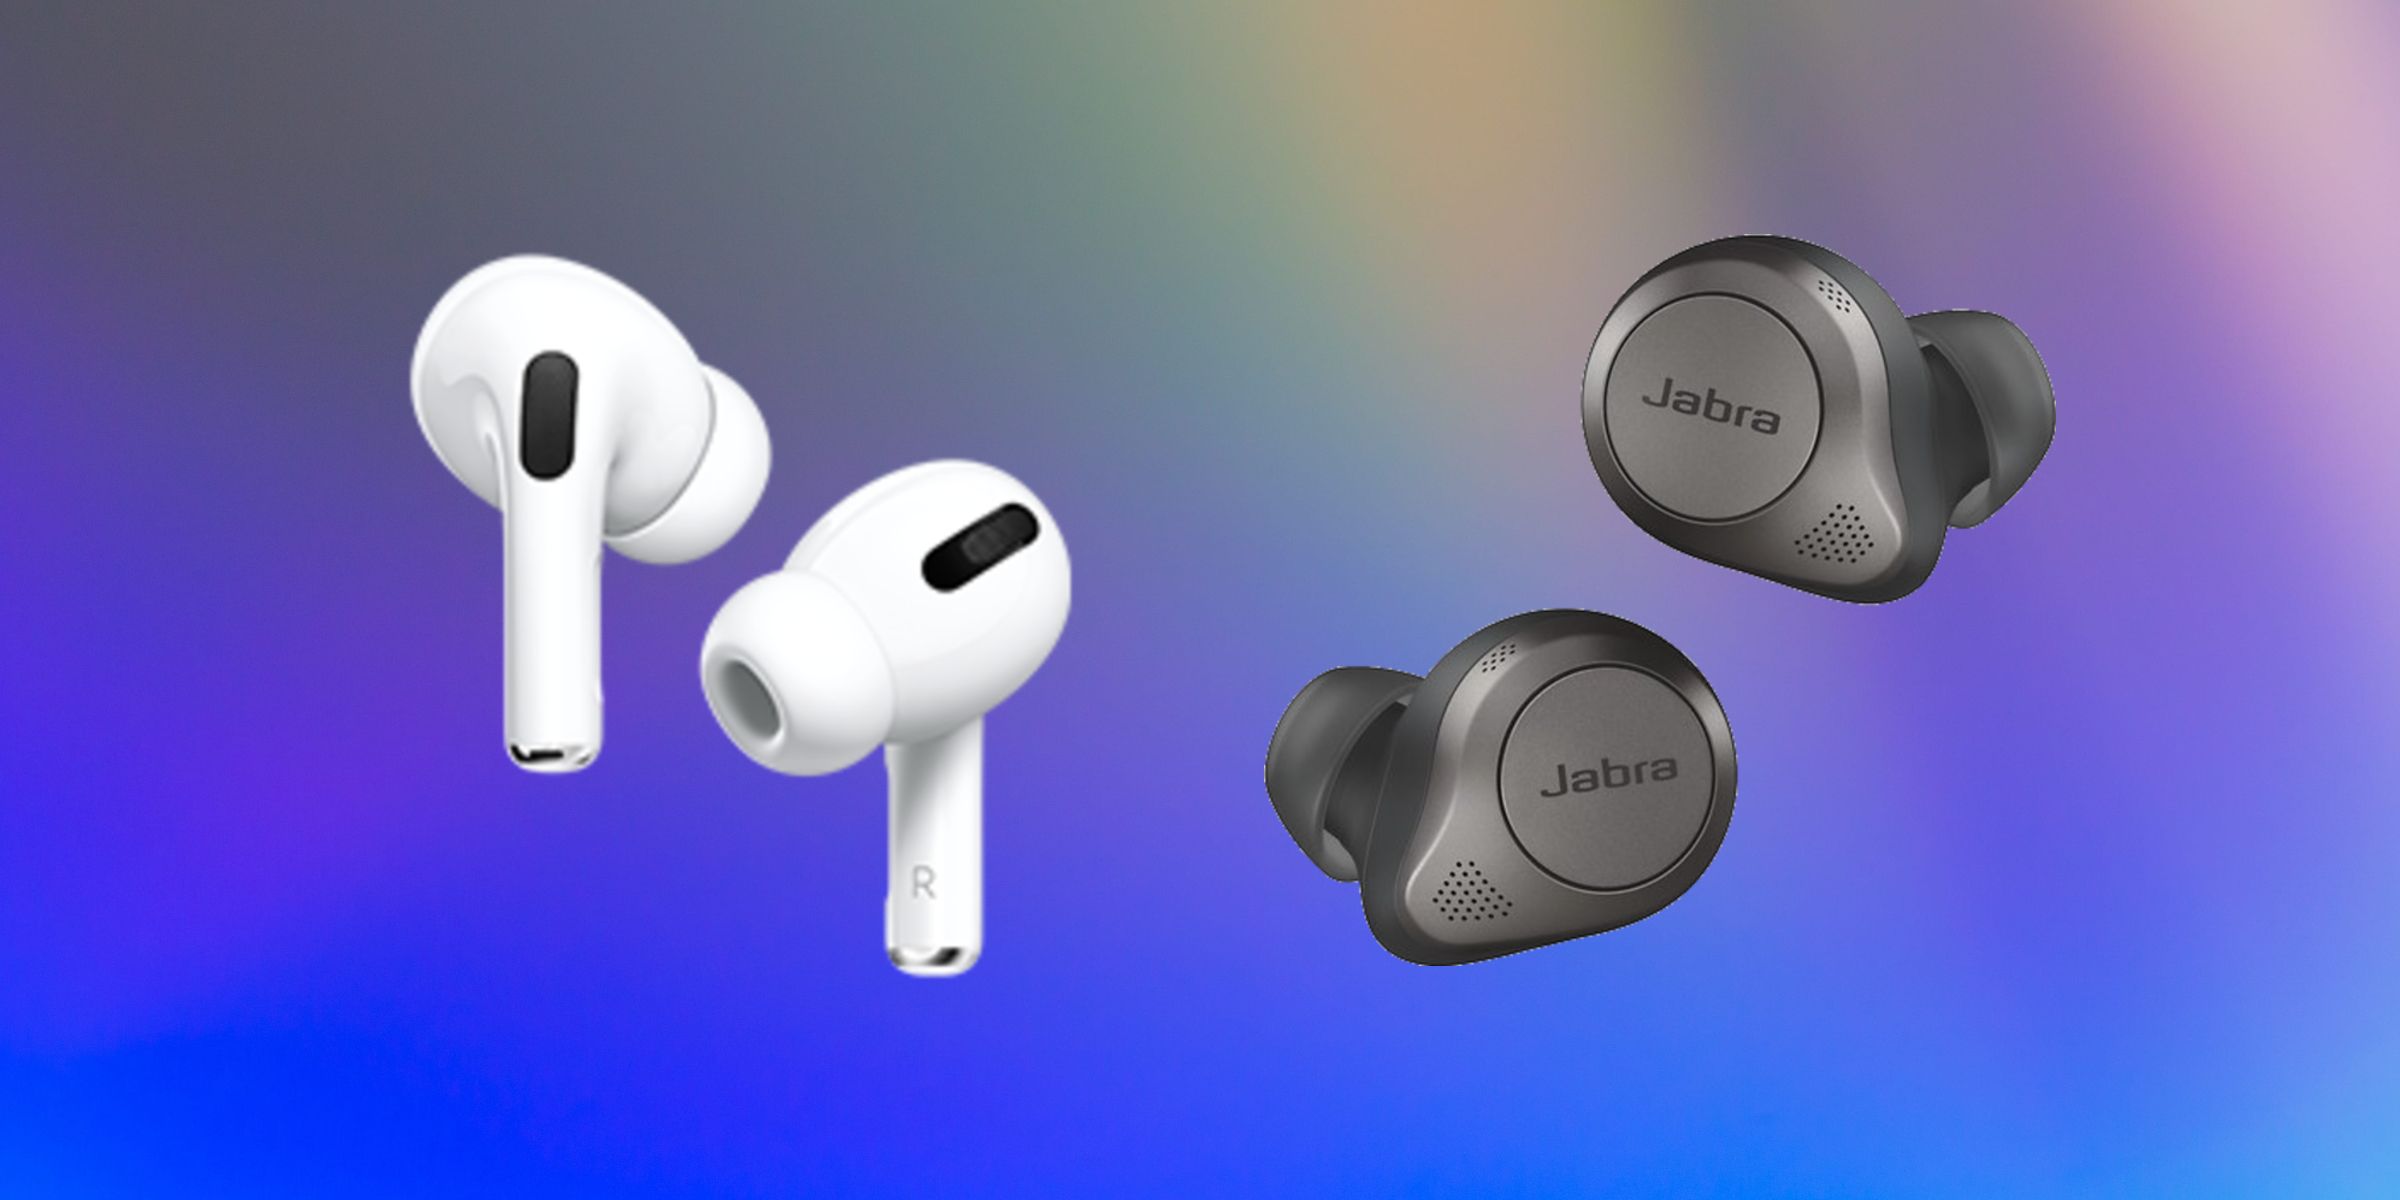 apple airpods and jabra elite true wireless headphones earbud